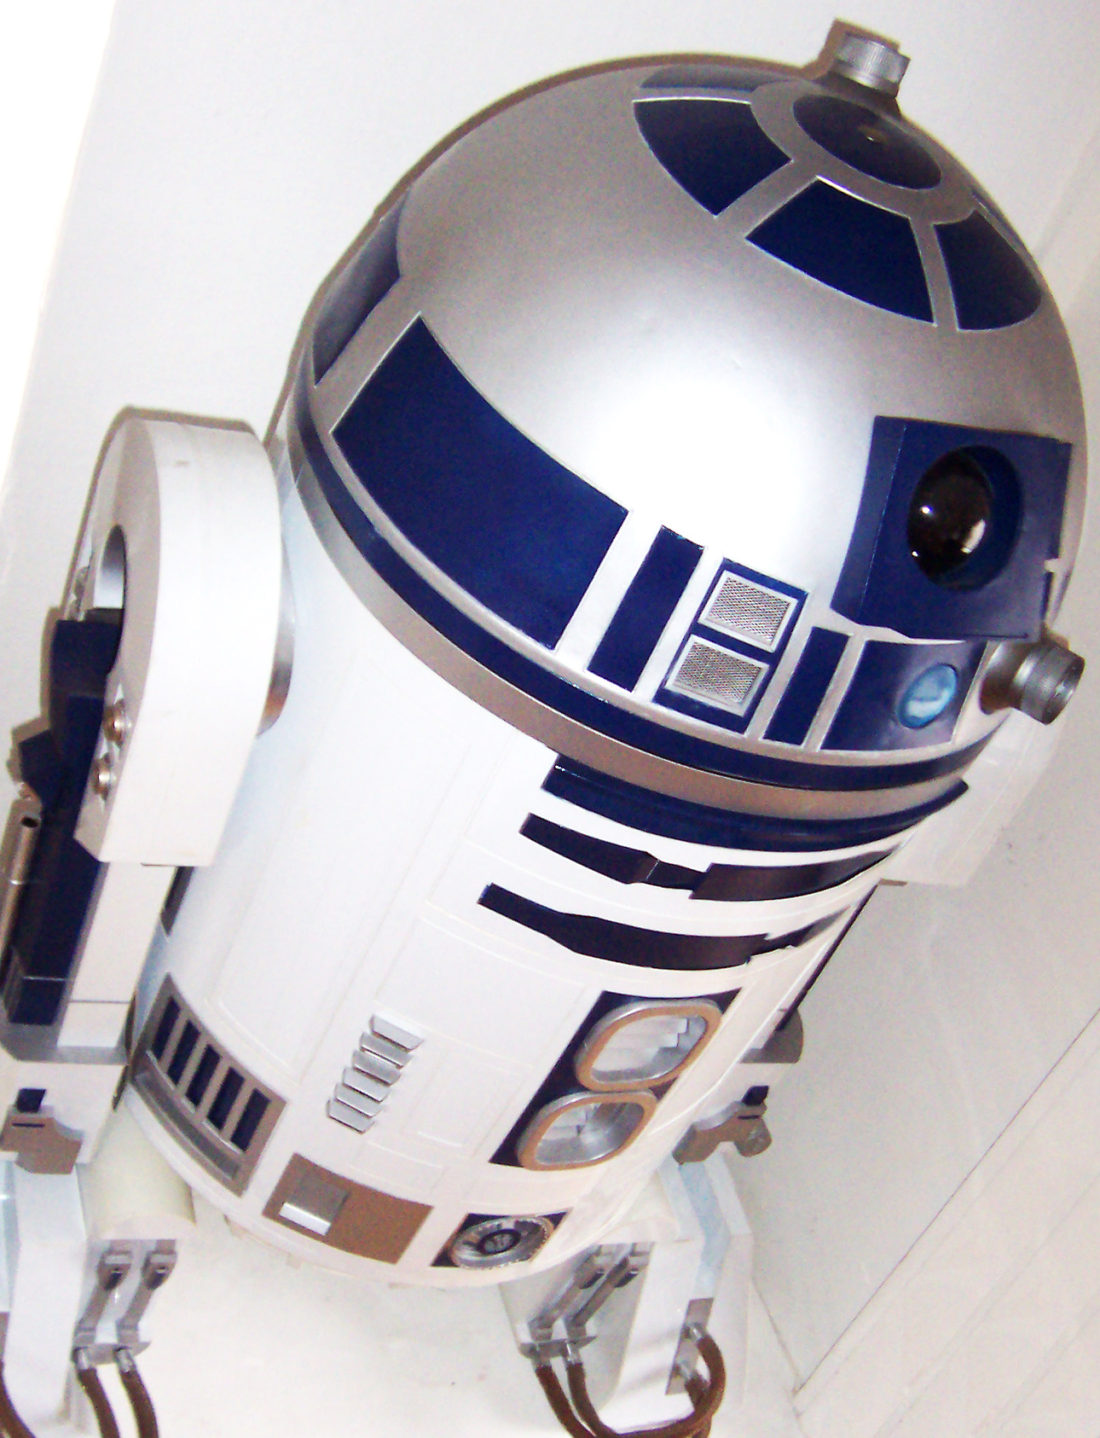 Life Sized R2